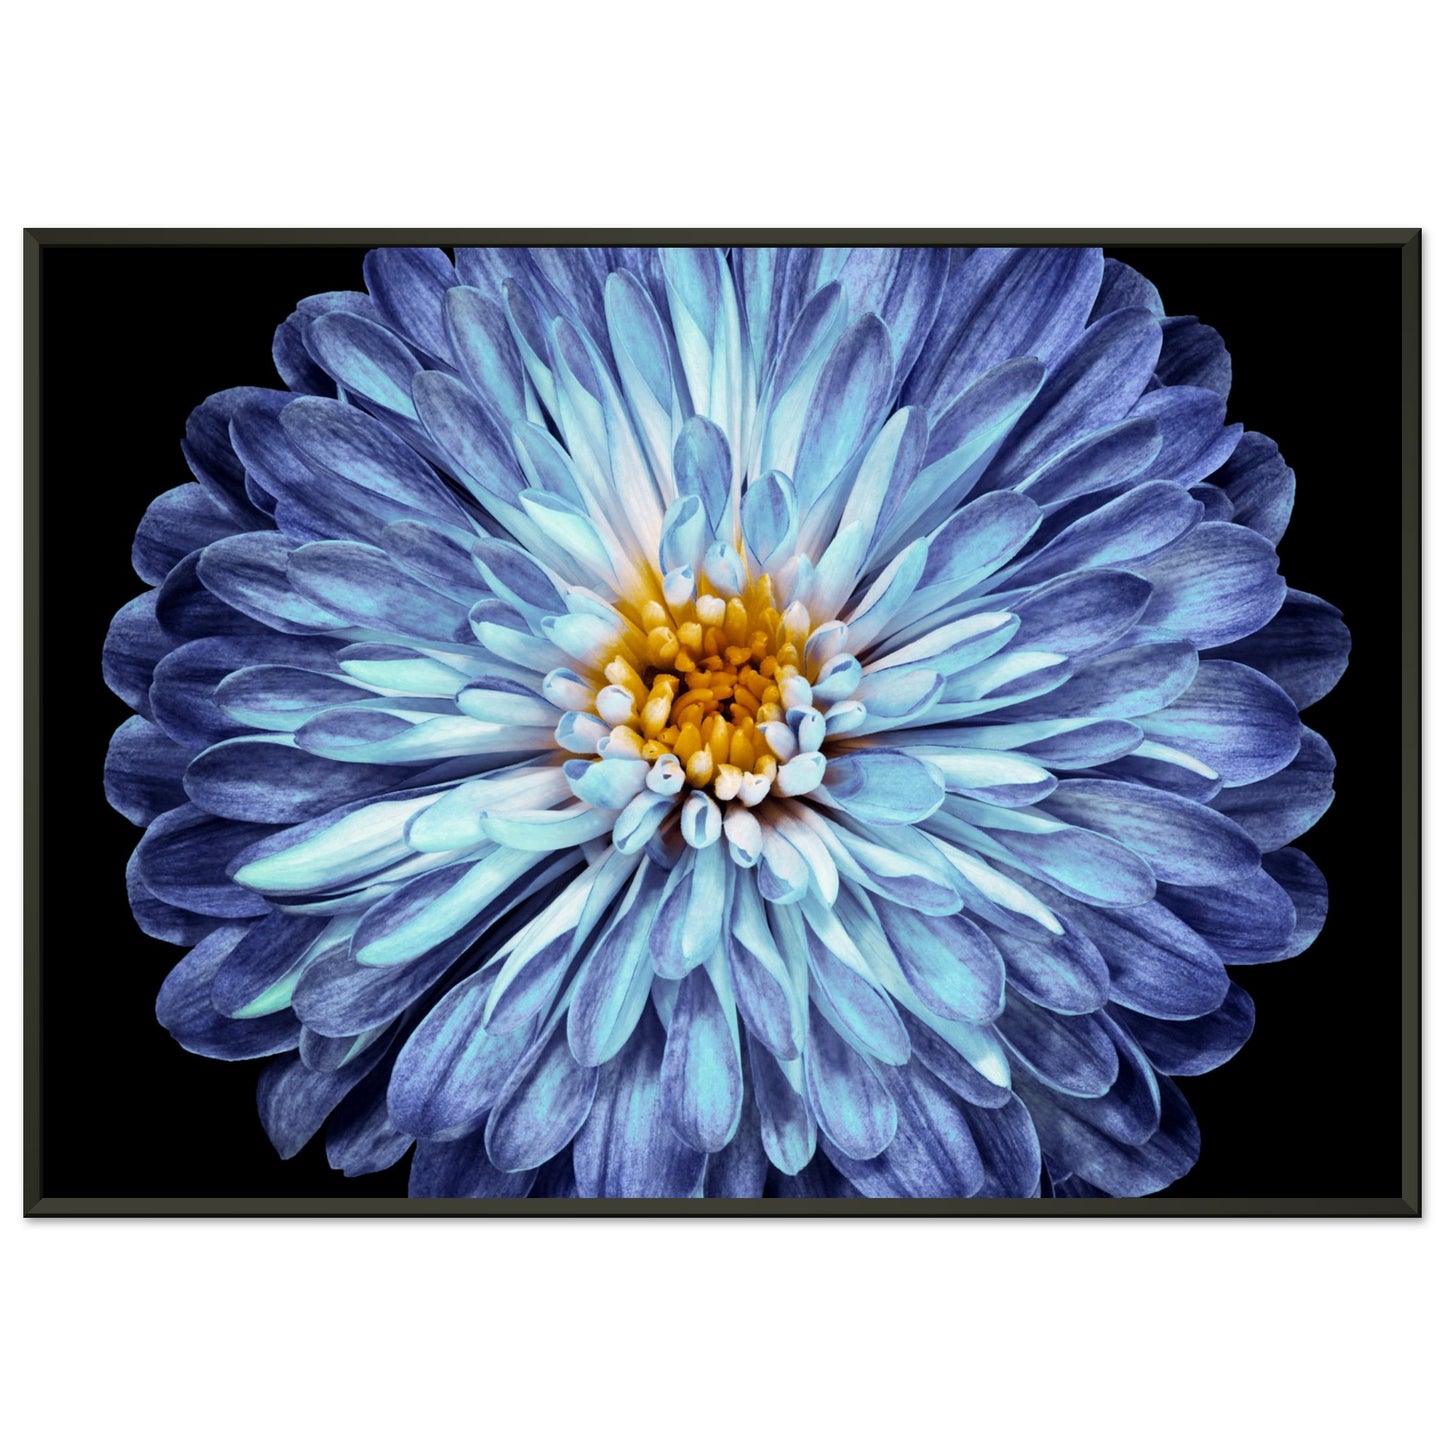 Purple-blue chrysanthemum